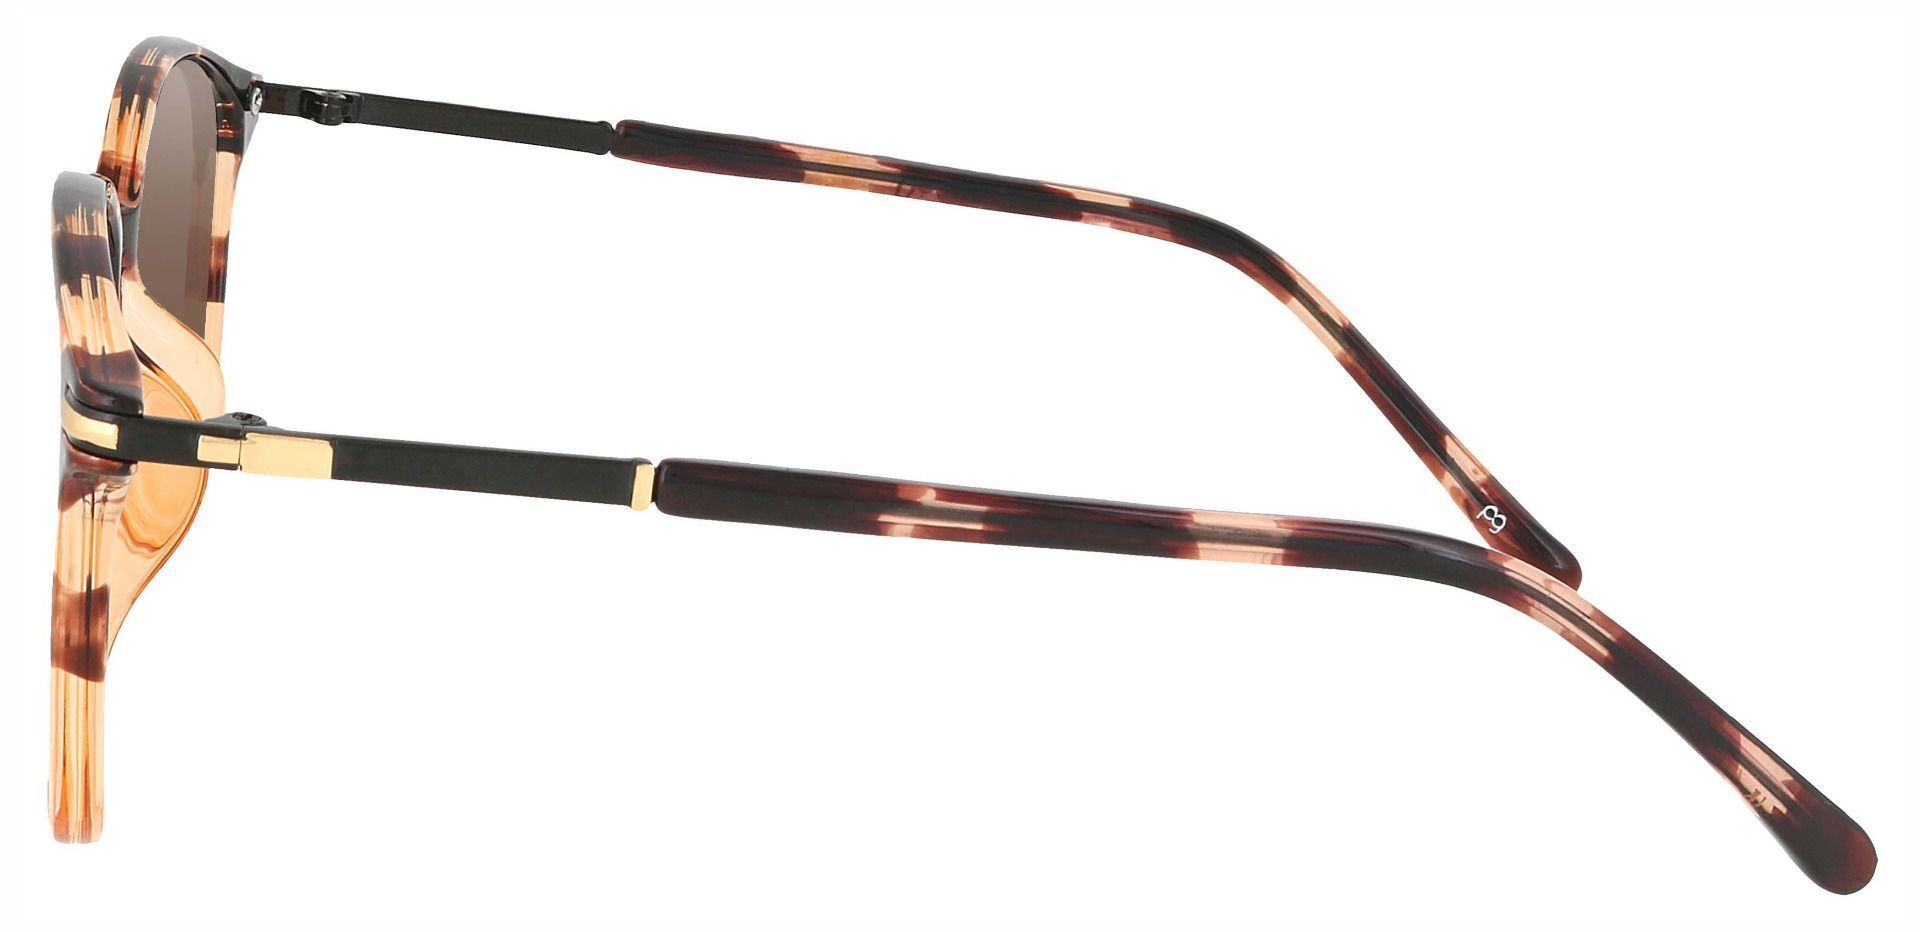 Danbury Oval Prescription Sunglasses - Tortoise Frame With Brown Lenses